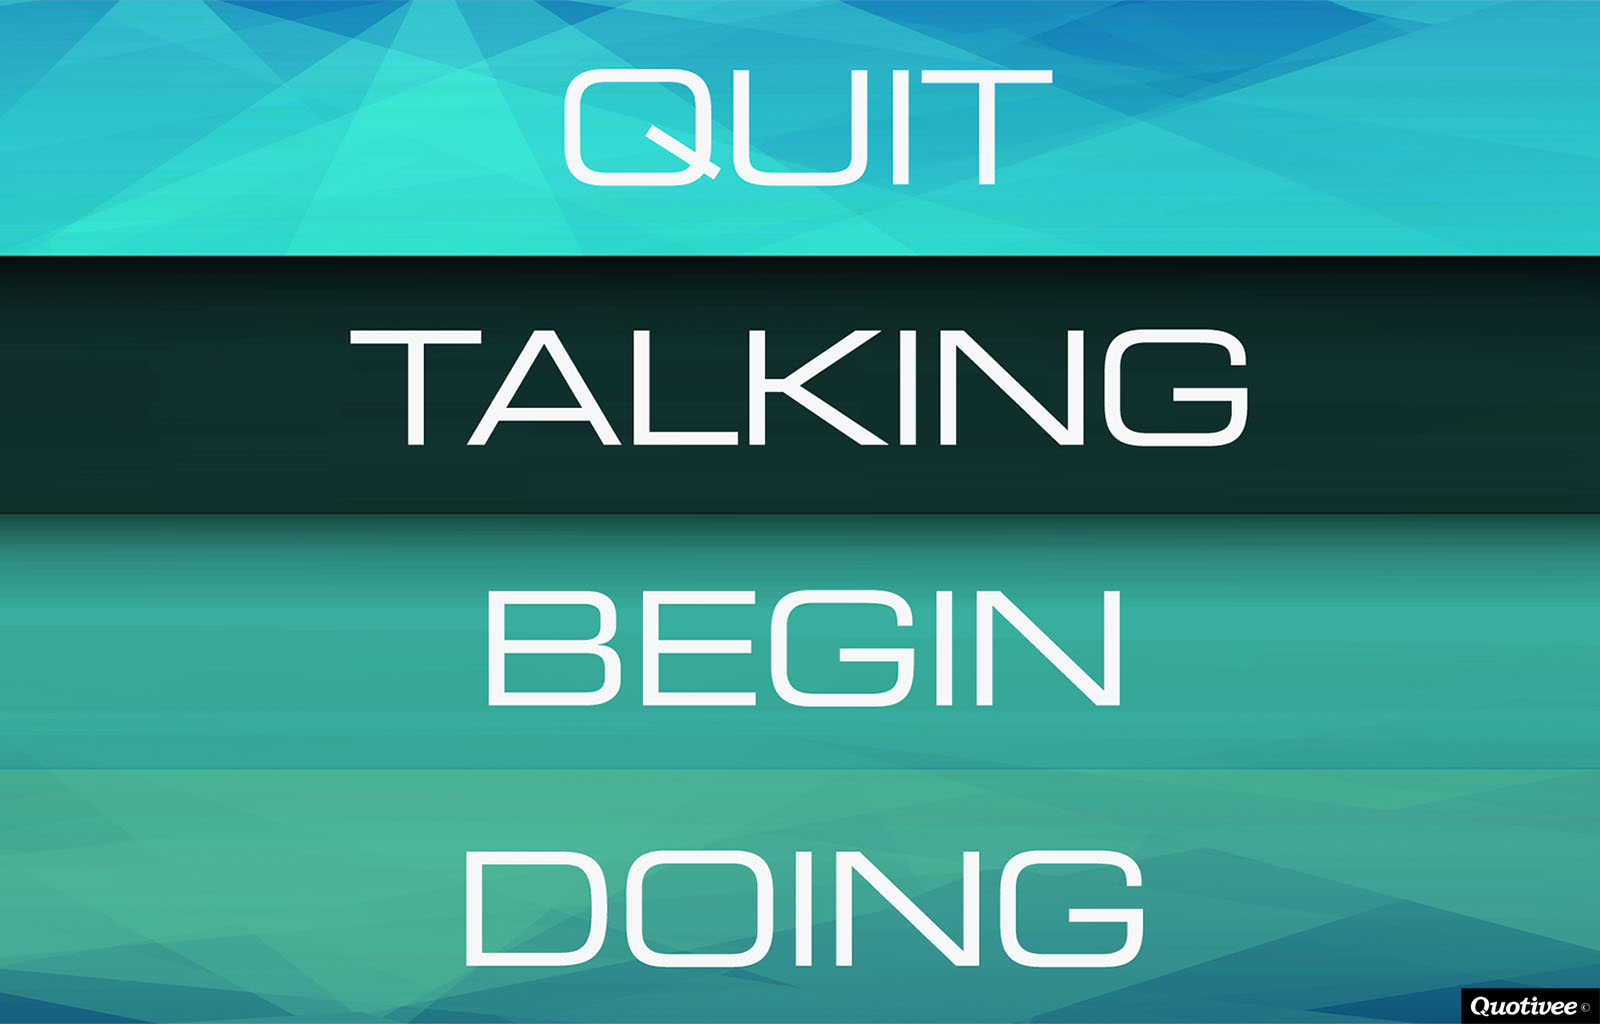 Quit Talking Begin Doing   Inspirational Quotes   Quotivee